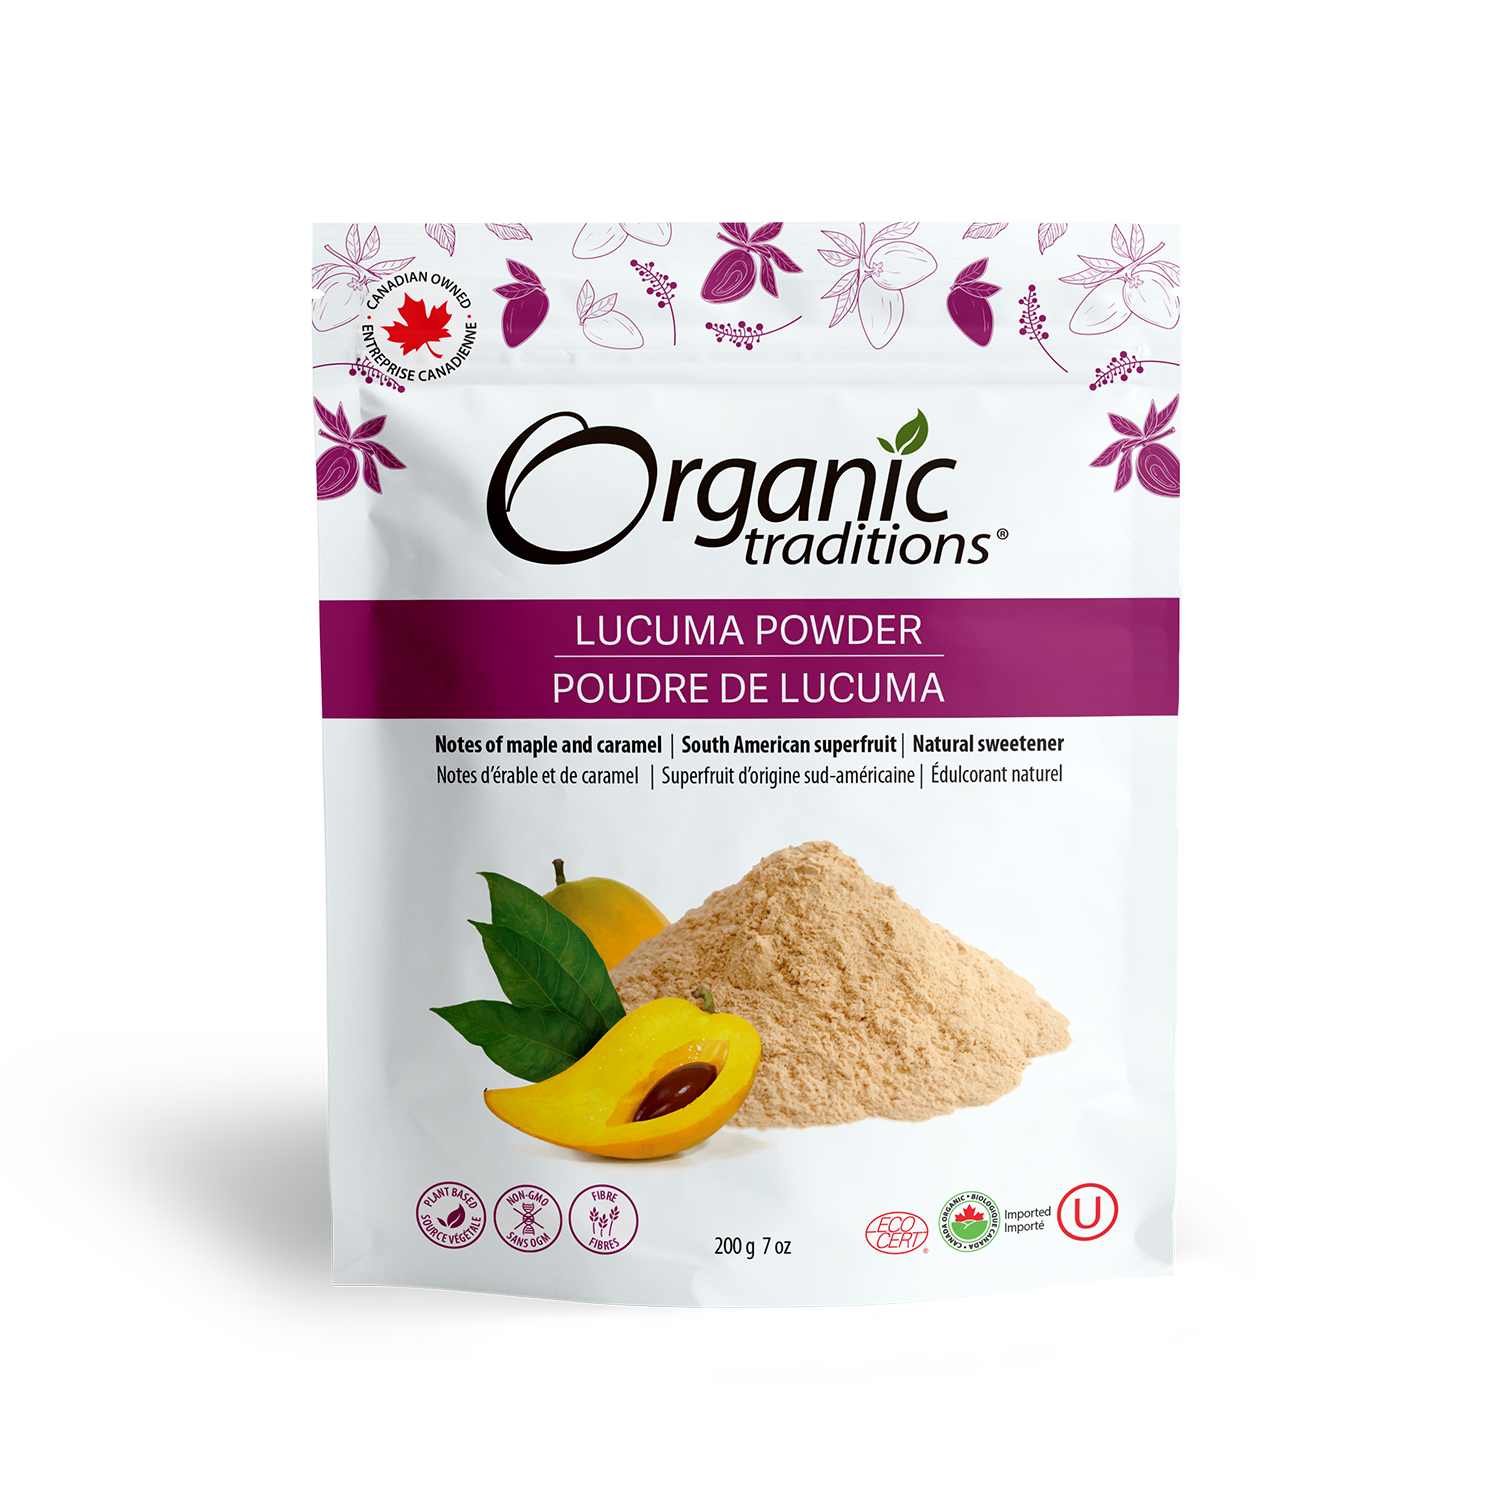 organic traditions lucuma powder front of bag image